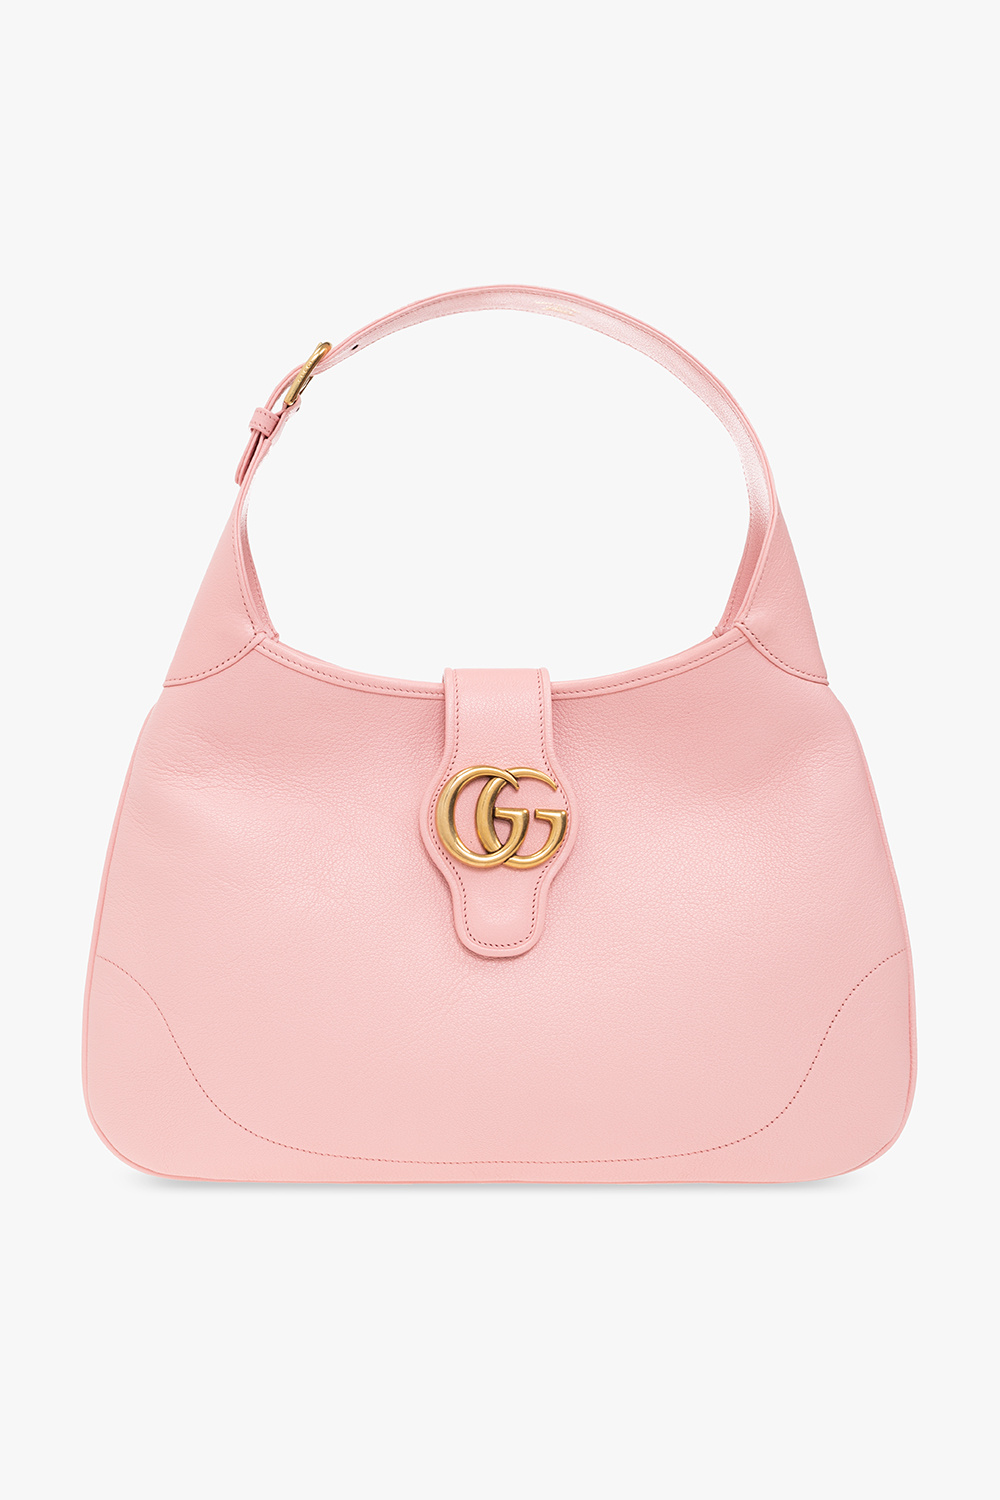 Gucci ‘Aphrodite Medium’ hobo shoulder bag